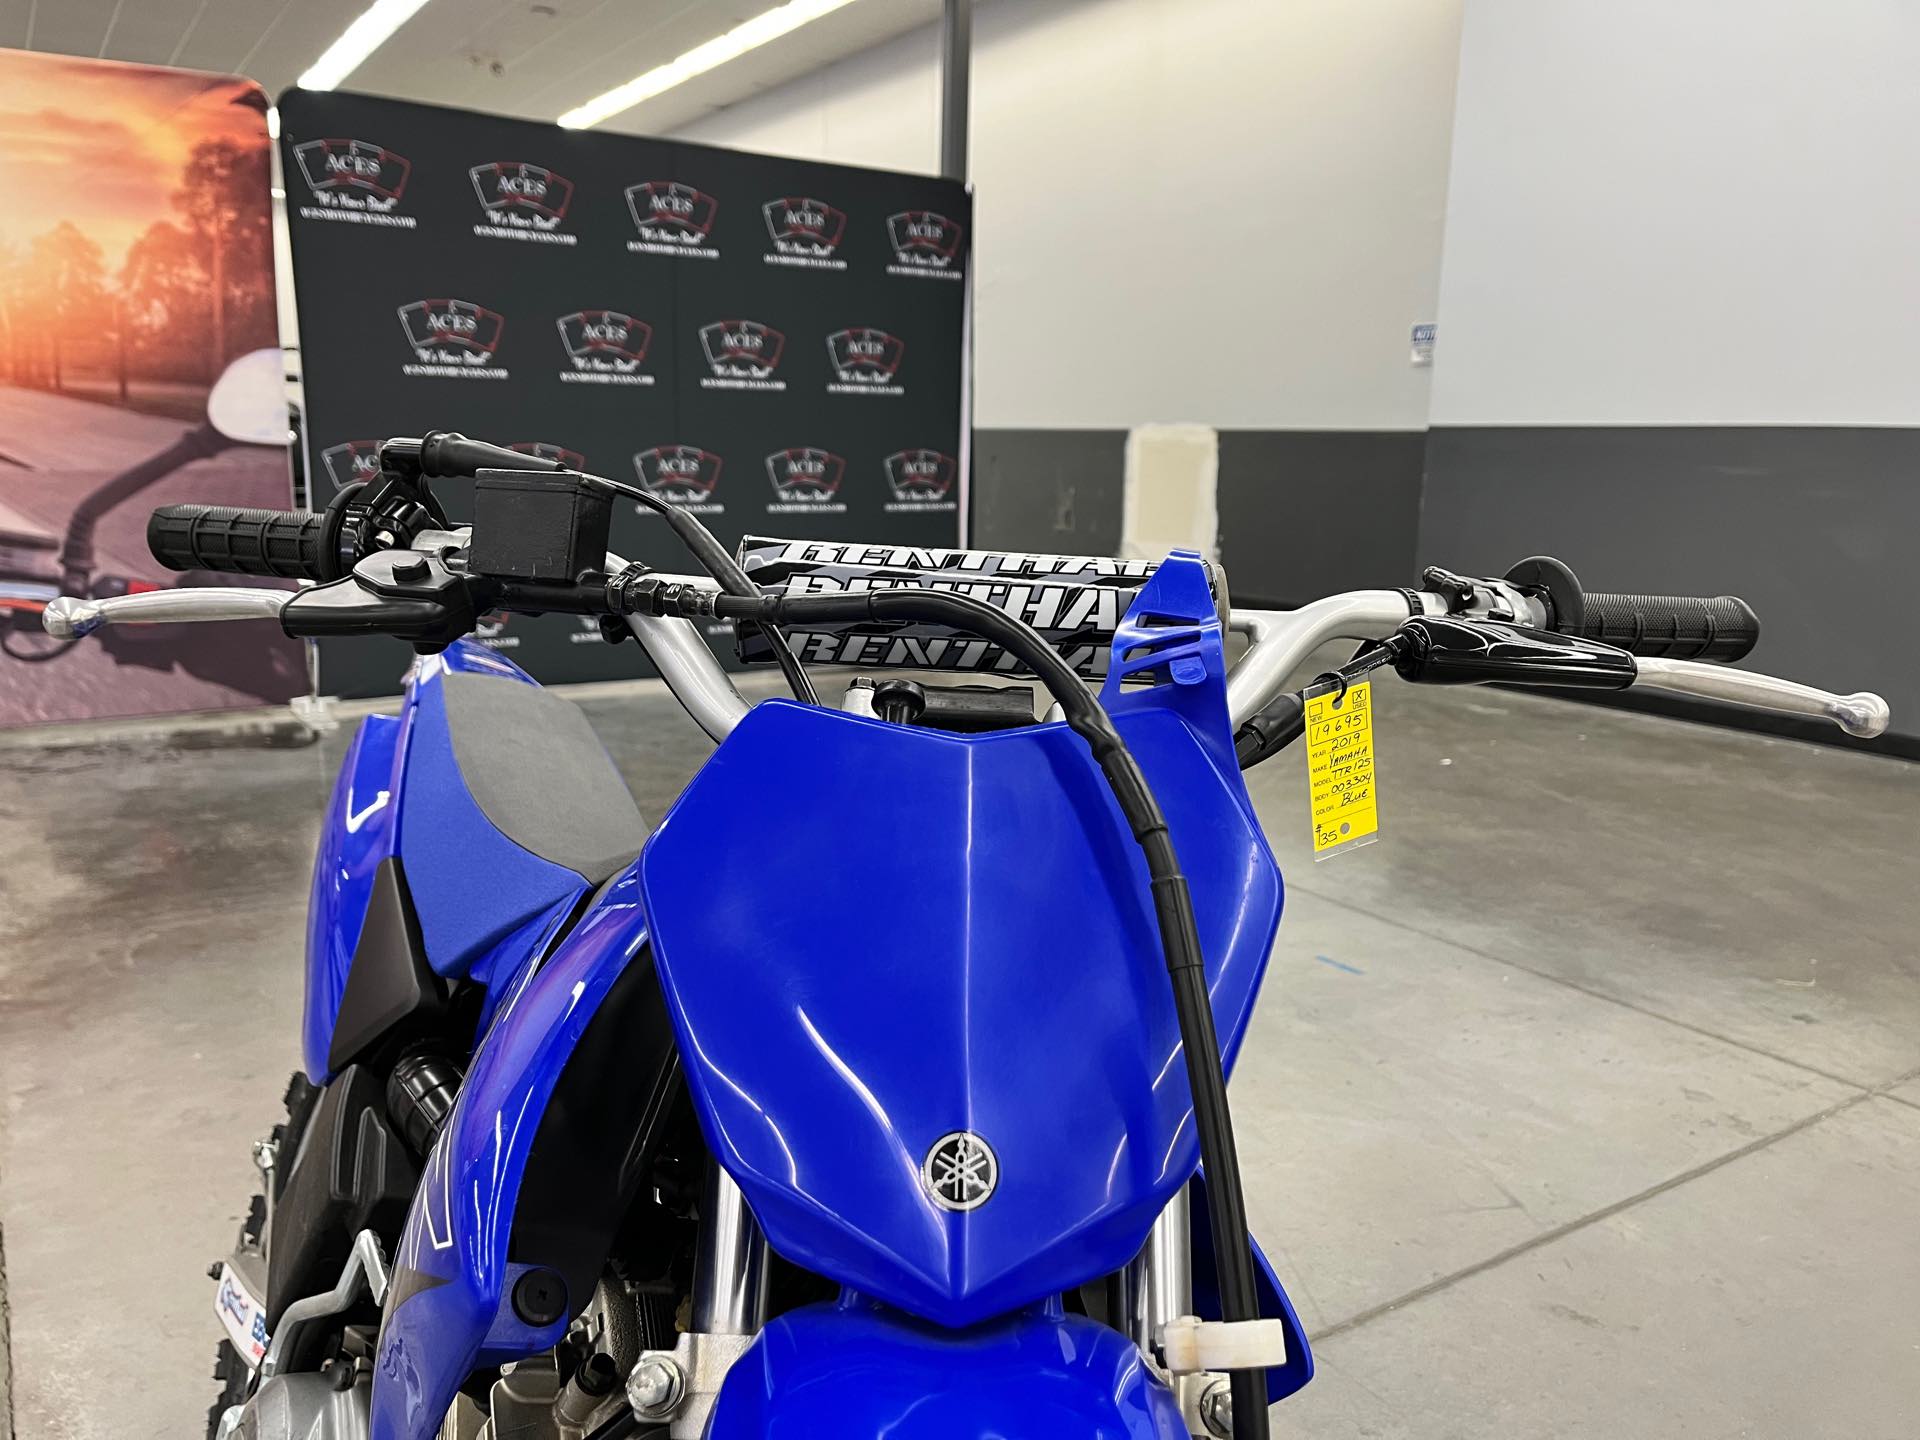 2019 Yamaha TT-R 125LE at Aces Motorcycles - Denver